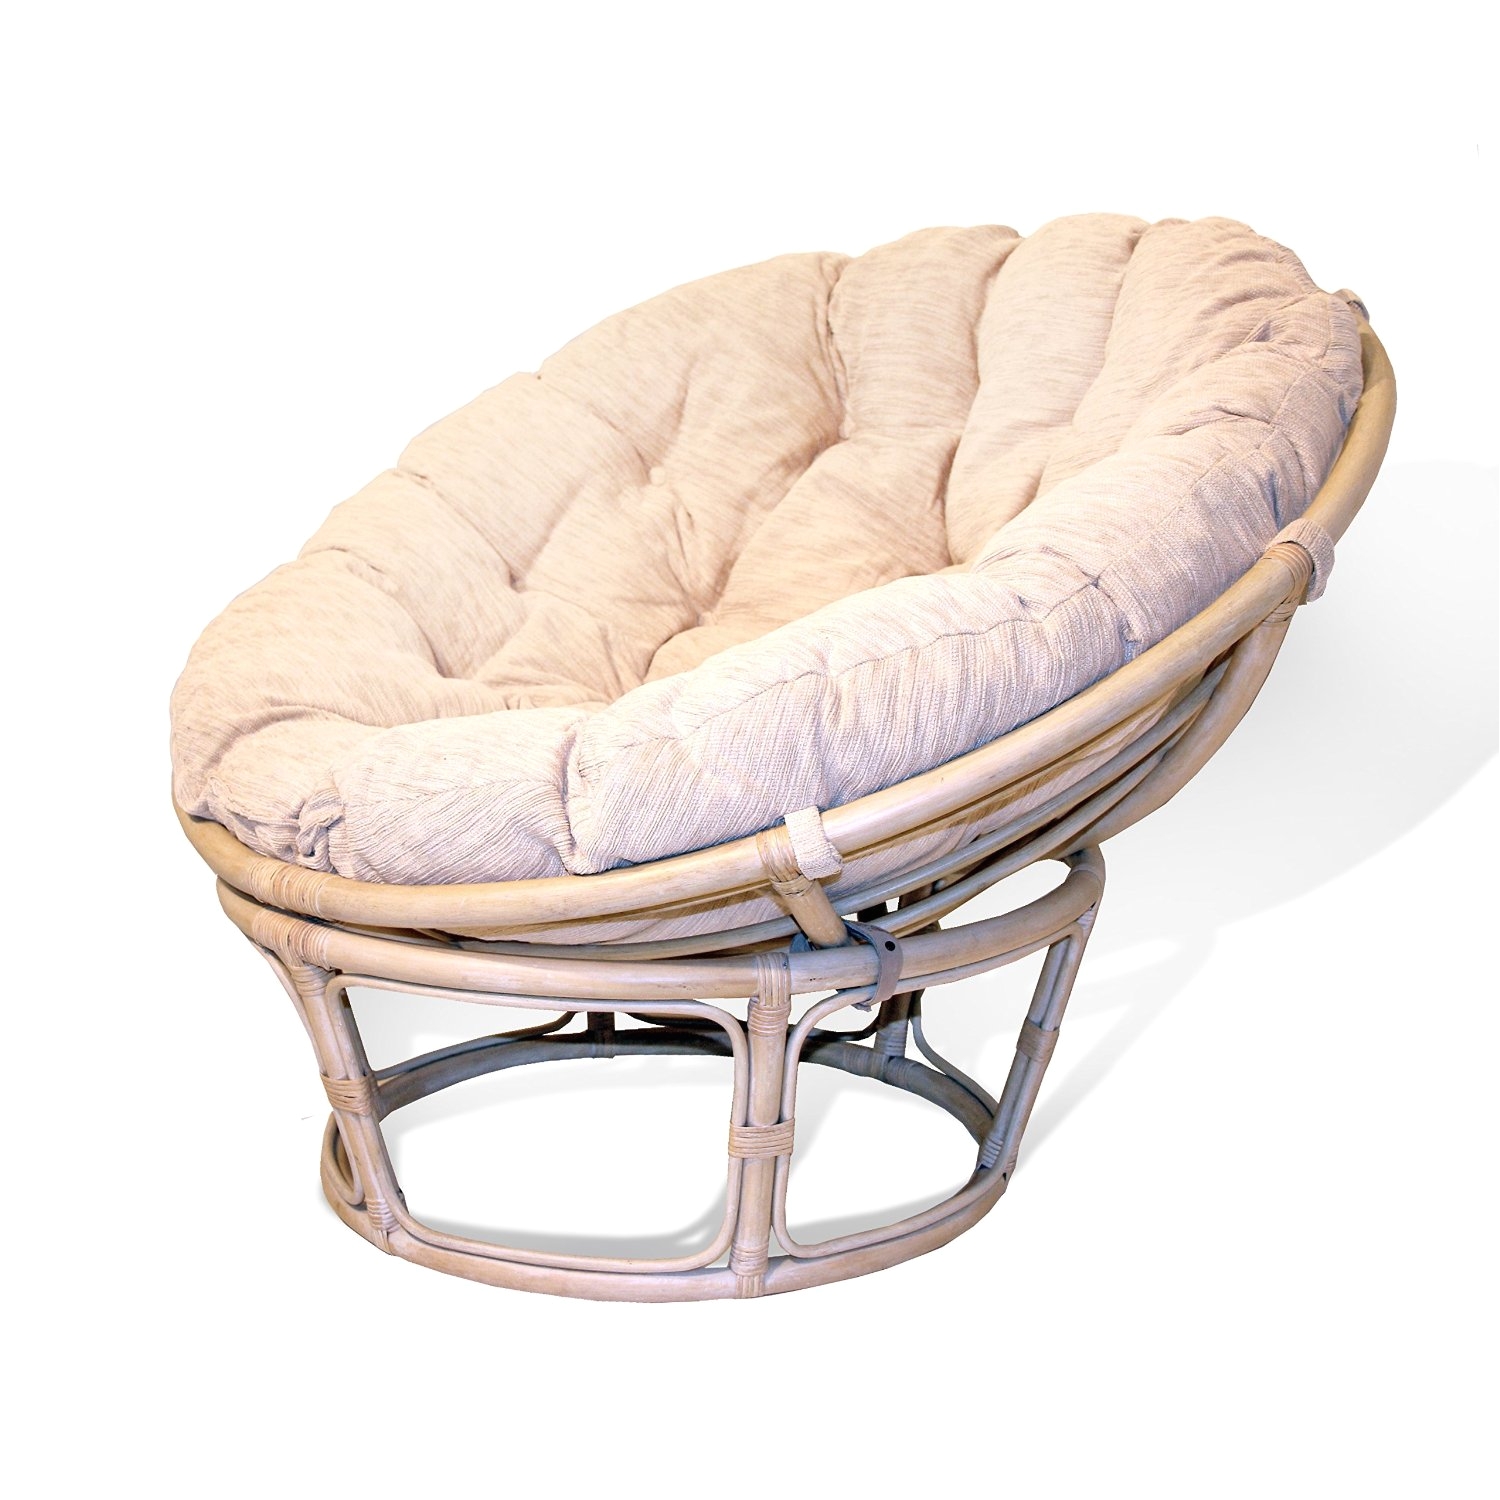 Baby Papasan Chair Target Furniture Amazon Handmade Rattan Wicker Round Papasan Chair with